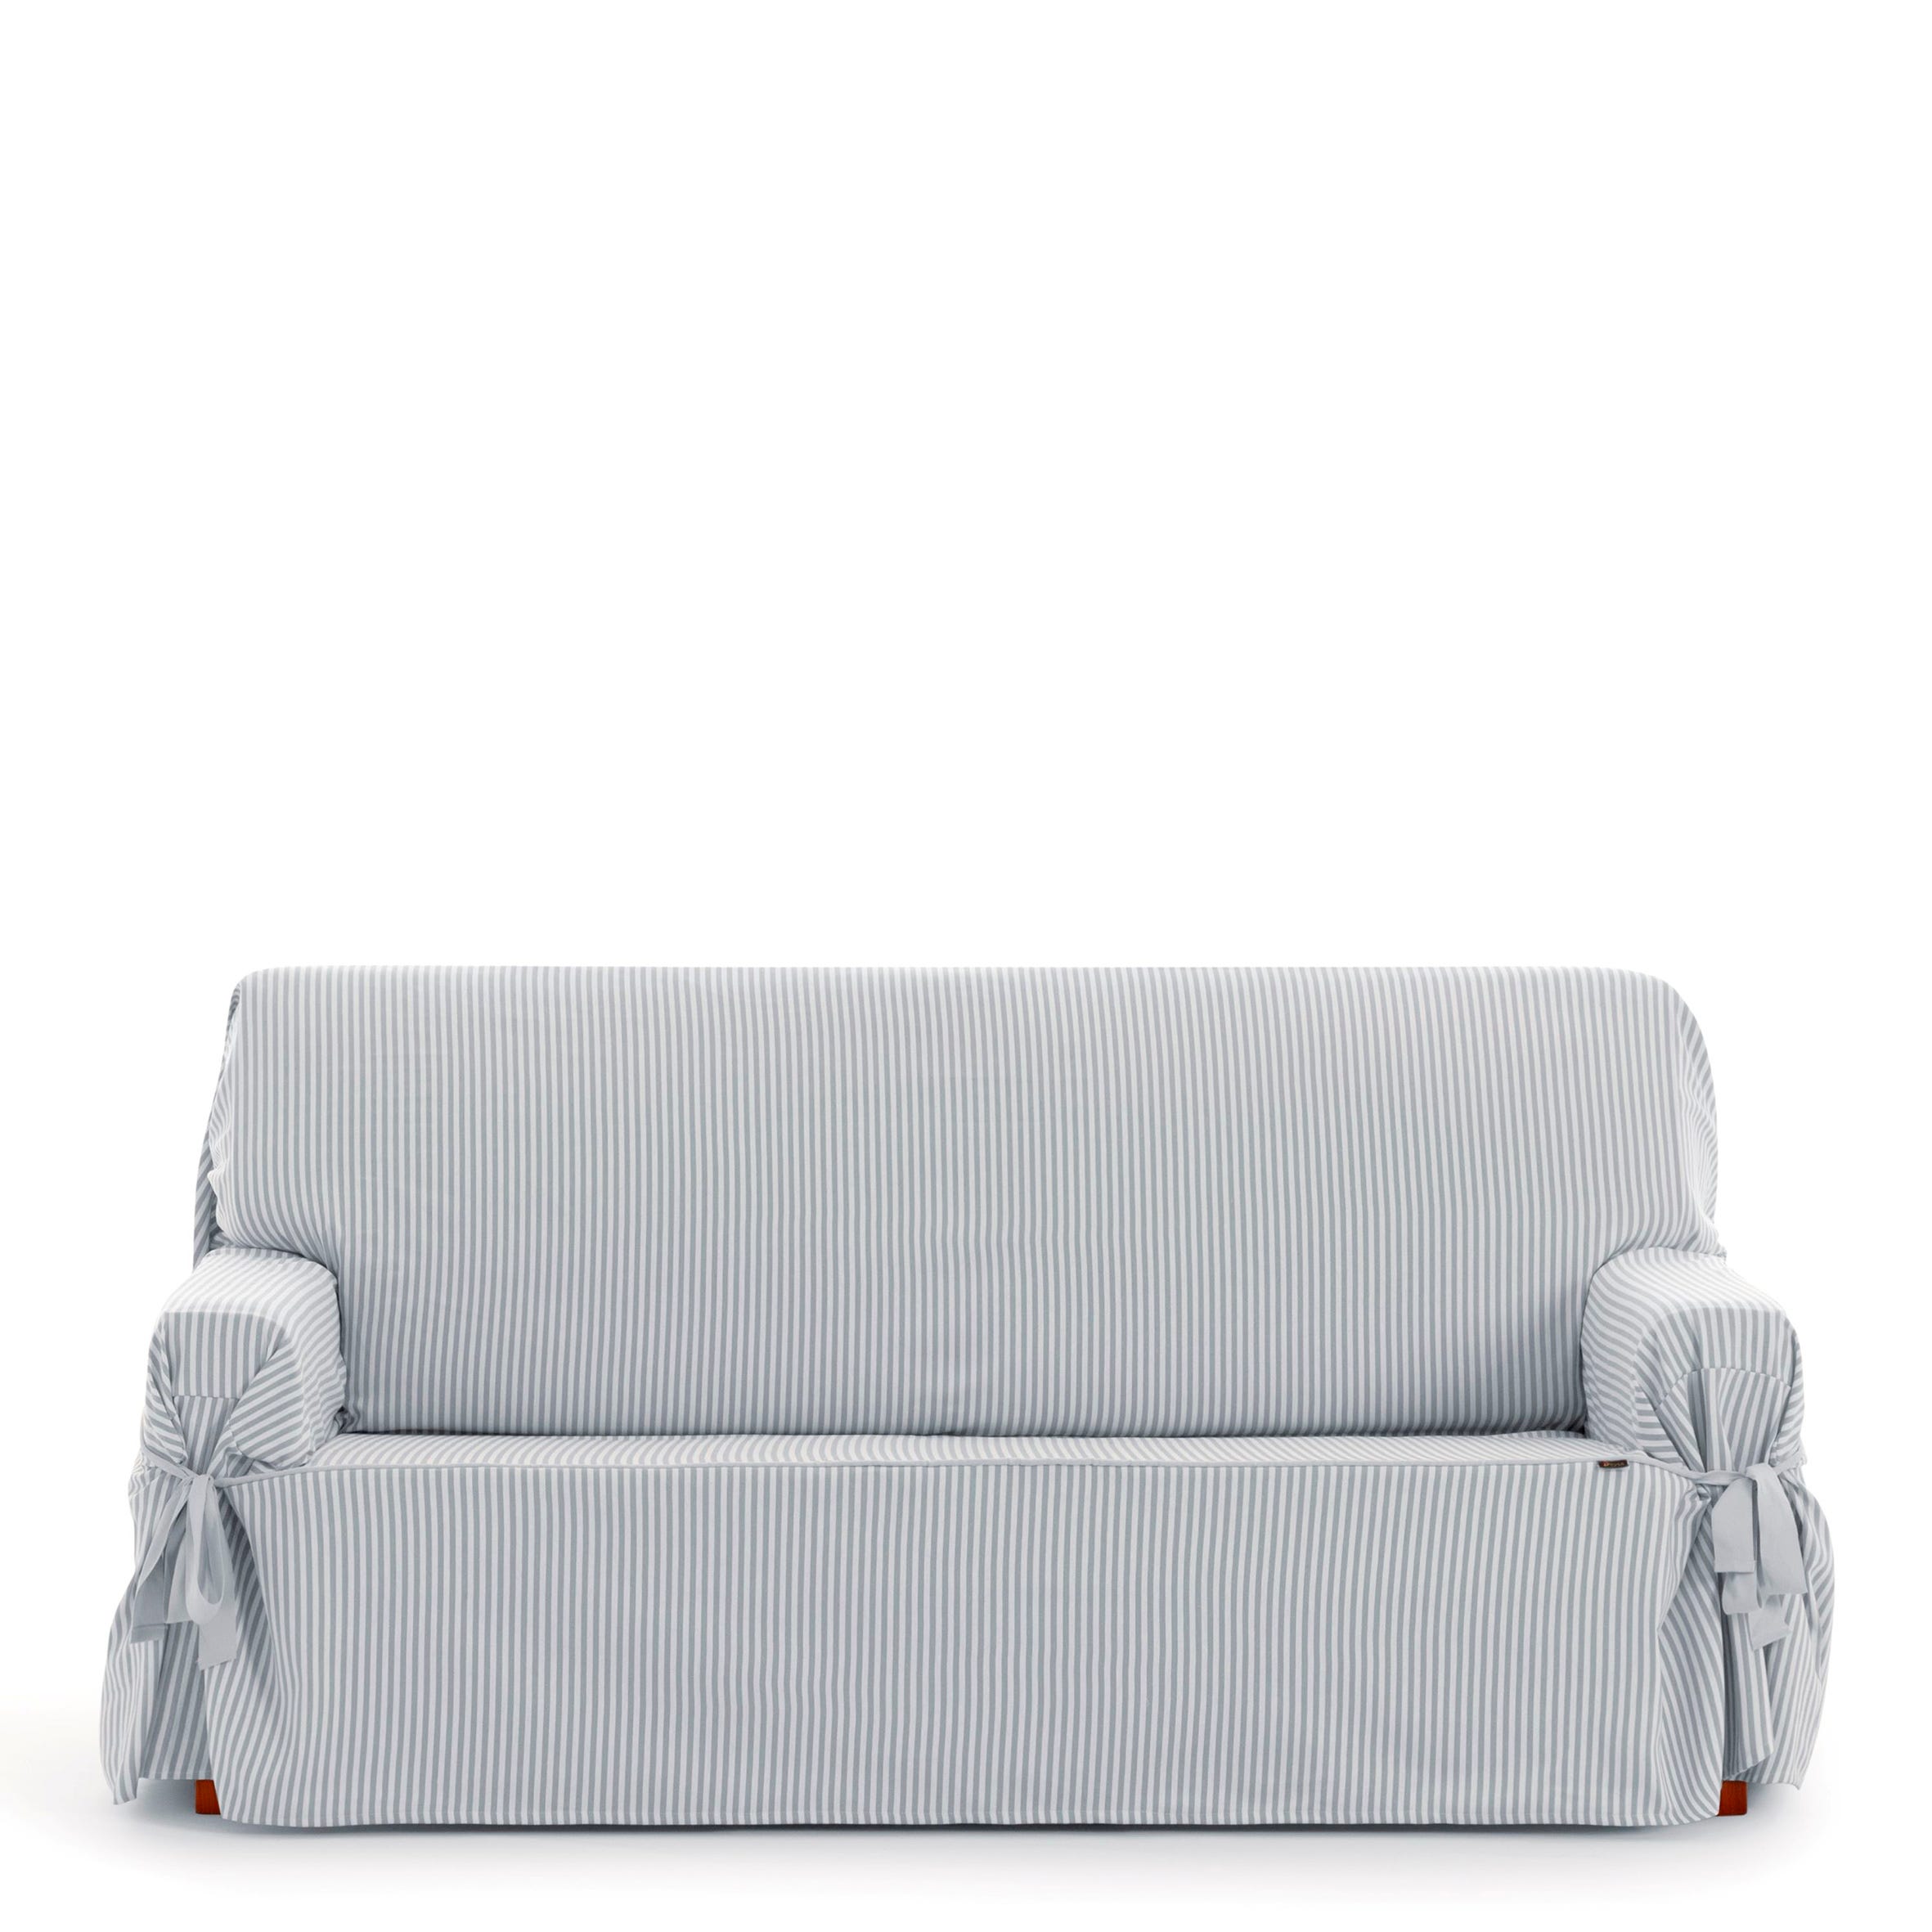 Funda cubre sofá 3 plazas lazos protector liso 180-230 cm gris